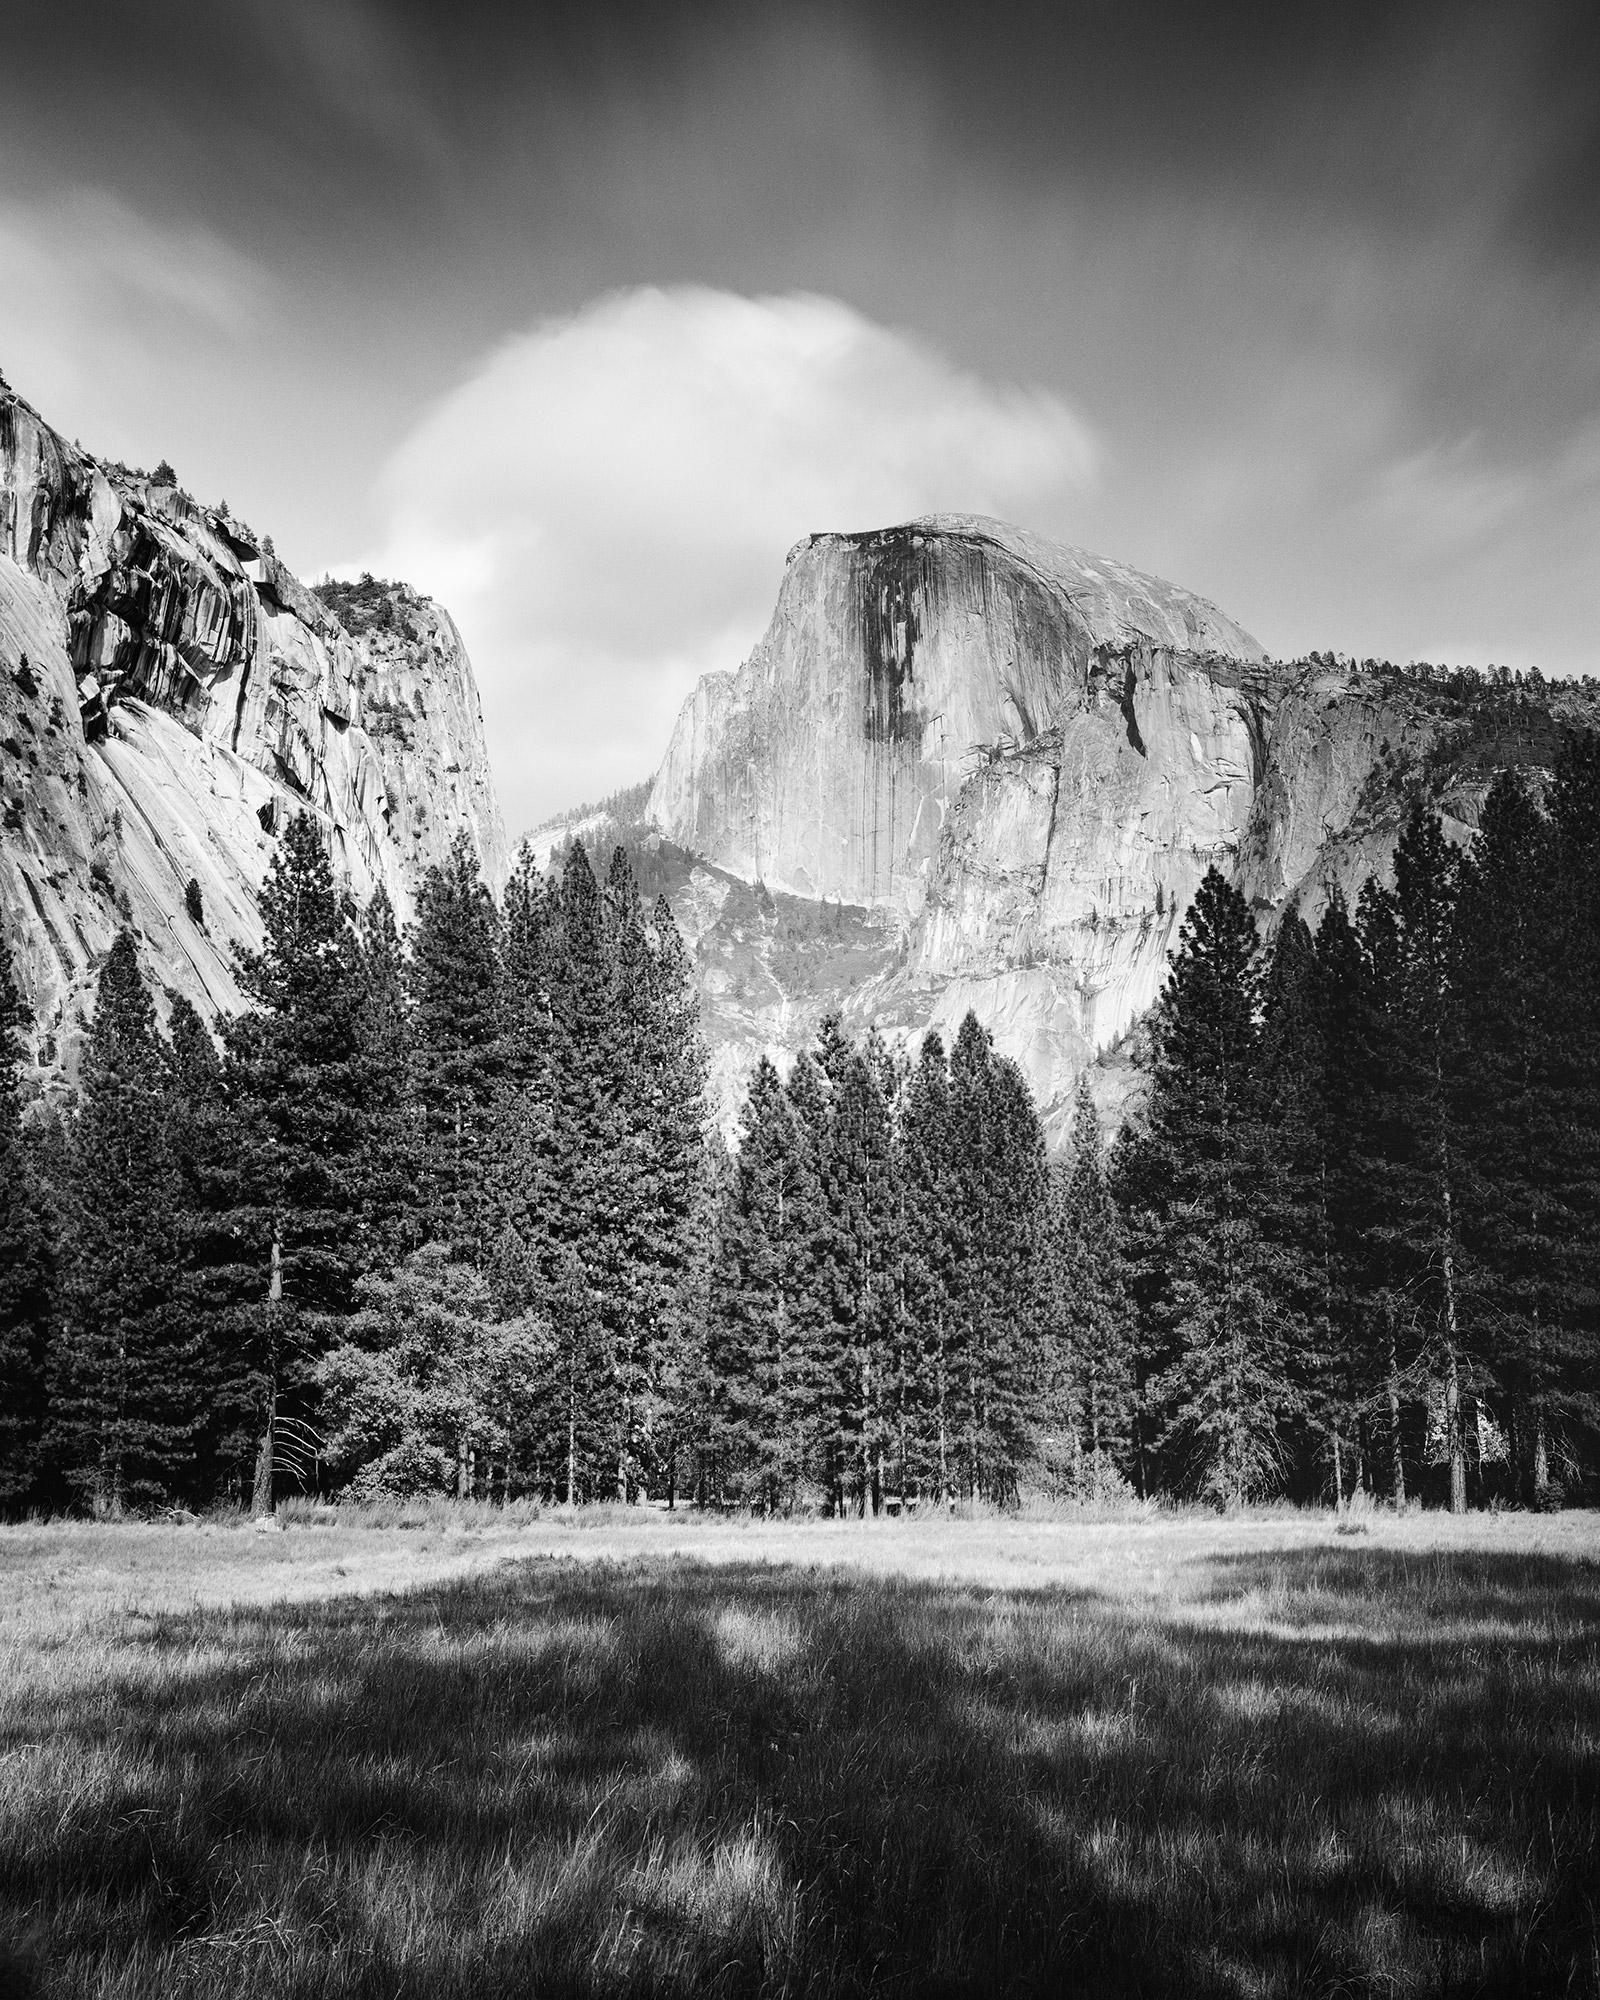 Gerald Berghammer Landscape Photograph - Half Dome, Yosemite National Park, USA, black and white photography, landscape